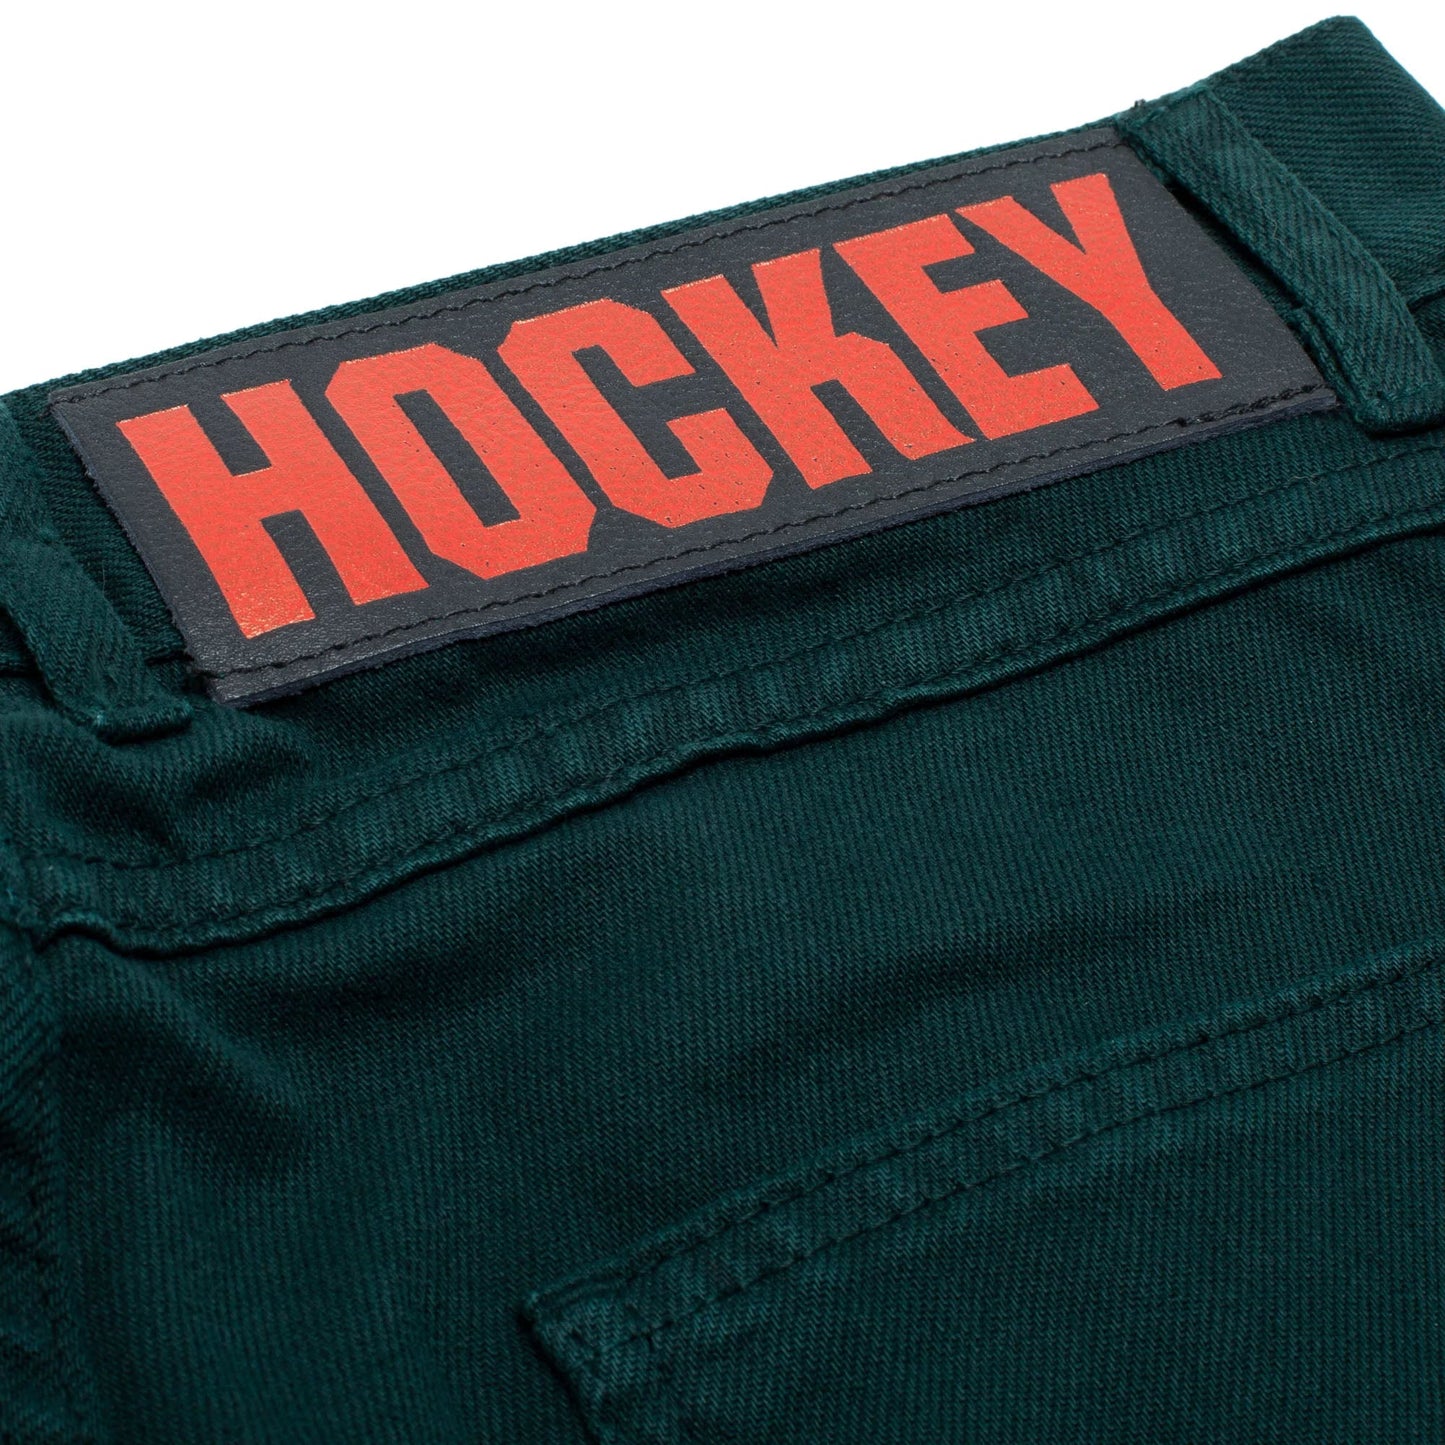 Hockey Double Knee Jean, dark green - Tiki Room Skateboards - 3